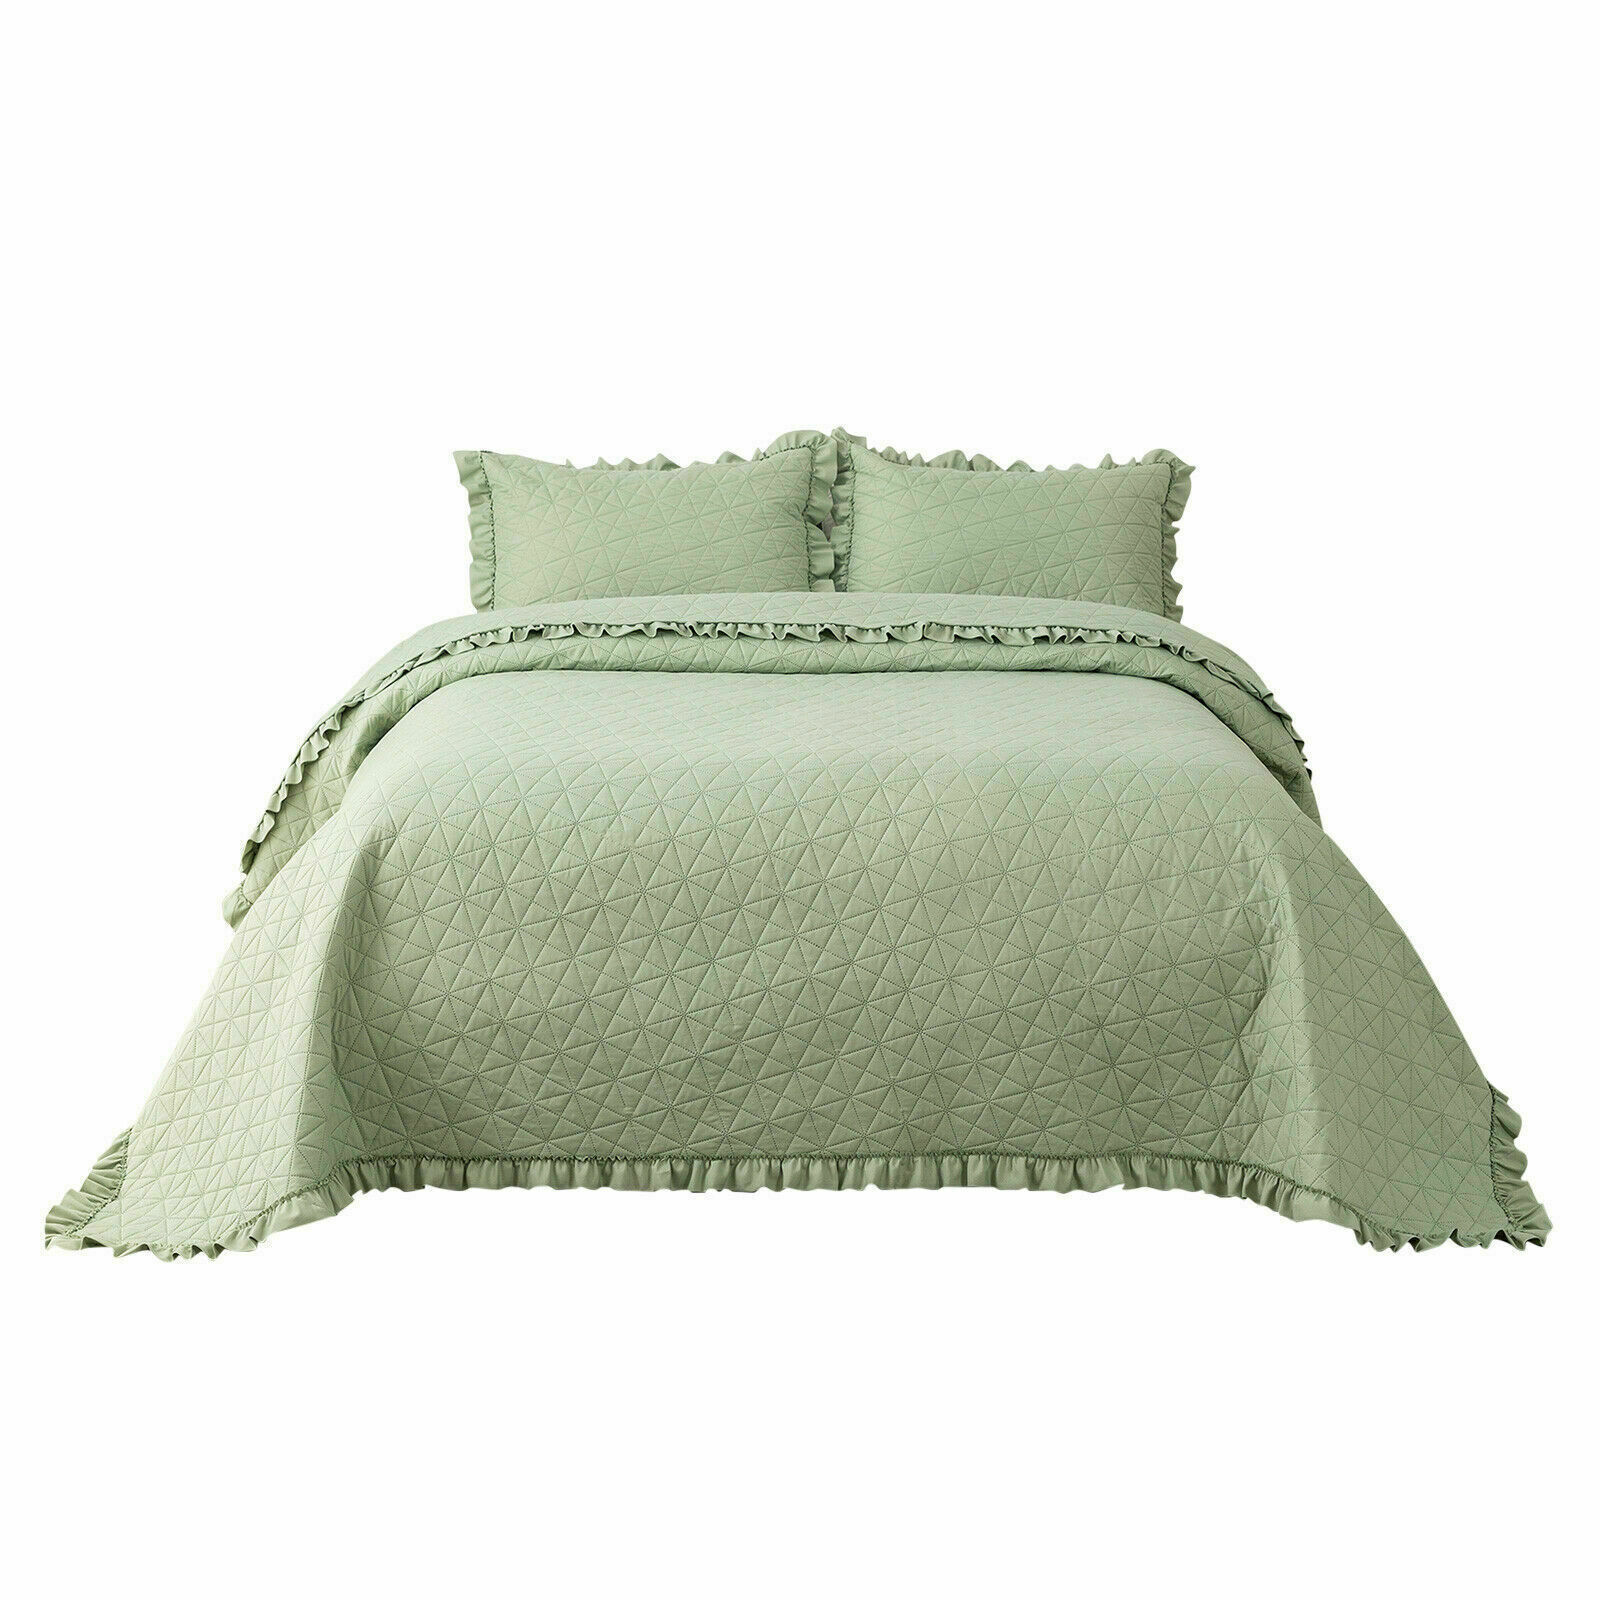 3 Pcs Embossed Bedspread Coverlet Quilt Bedding Set Ultra Soft Full Queen King